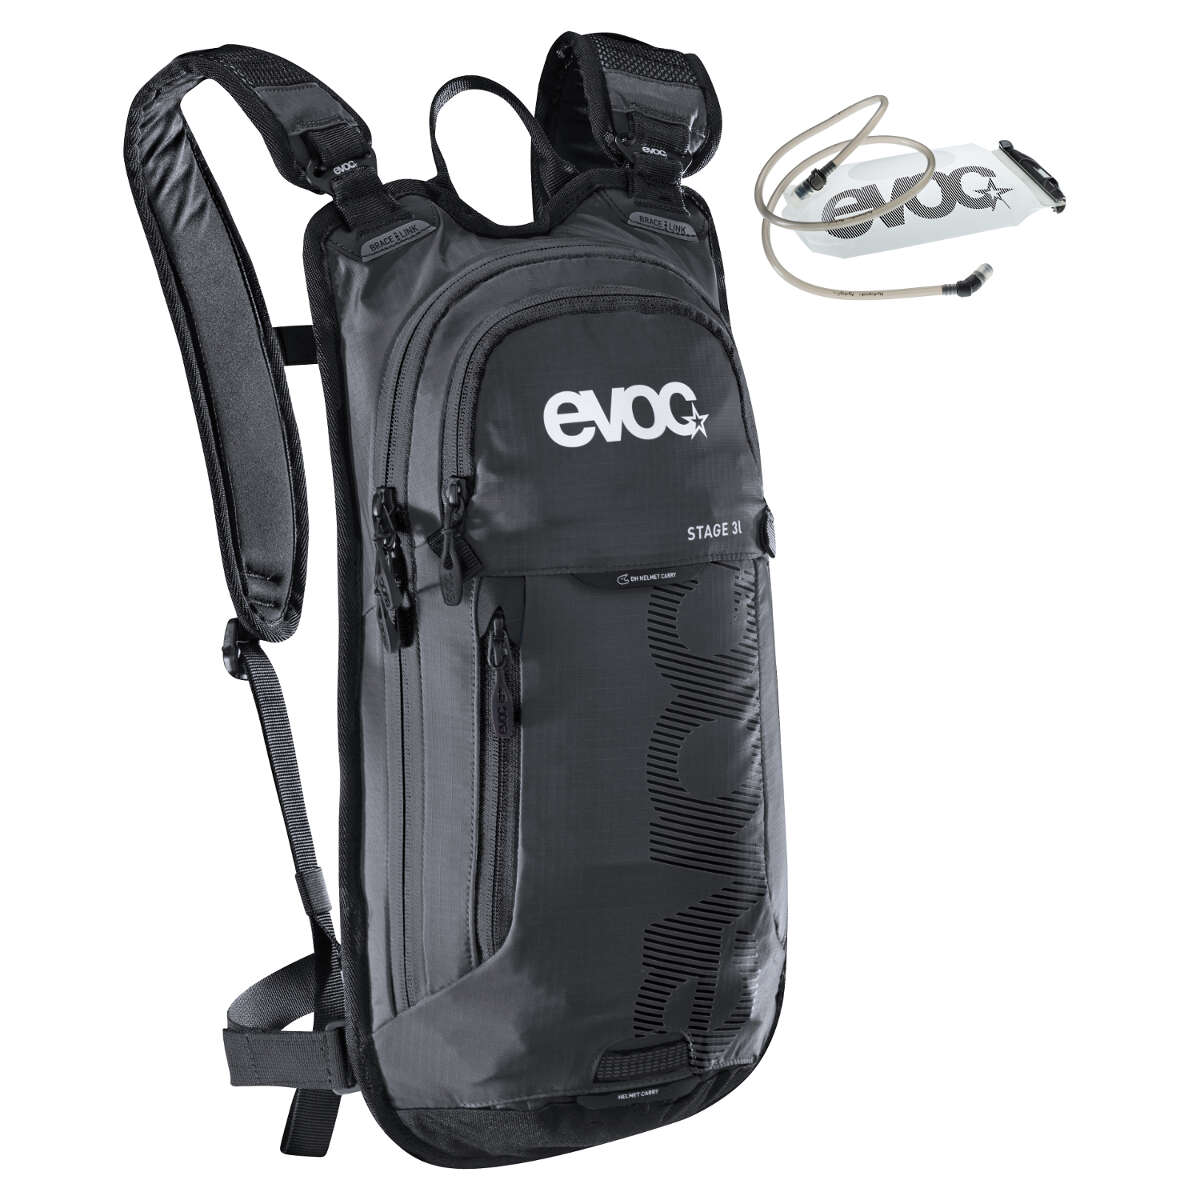 Evoc Backpack with Hydration System Stage Black, 3 Liter